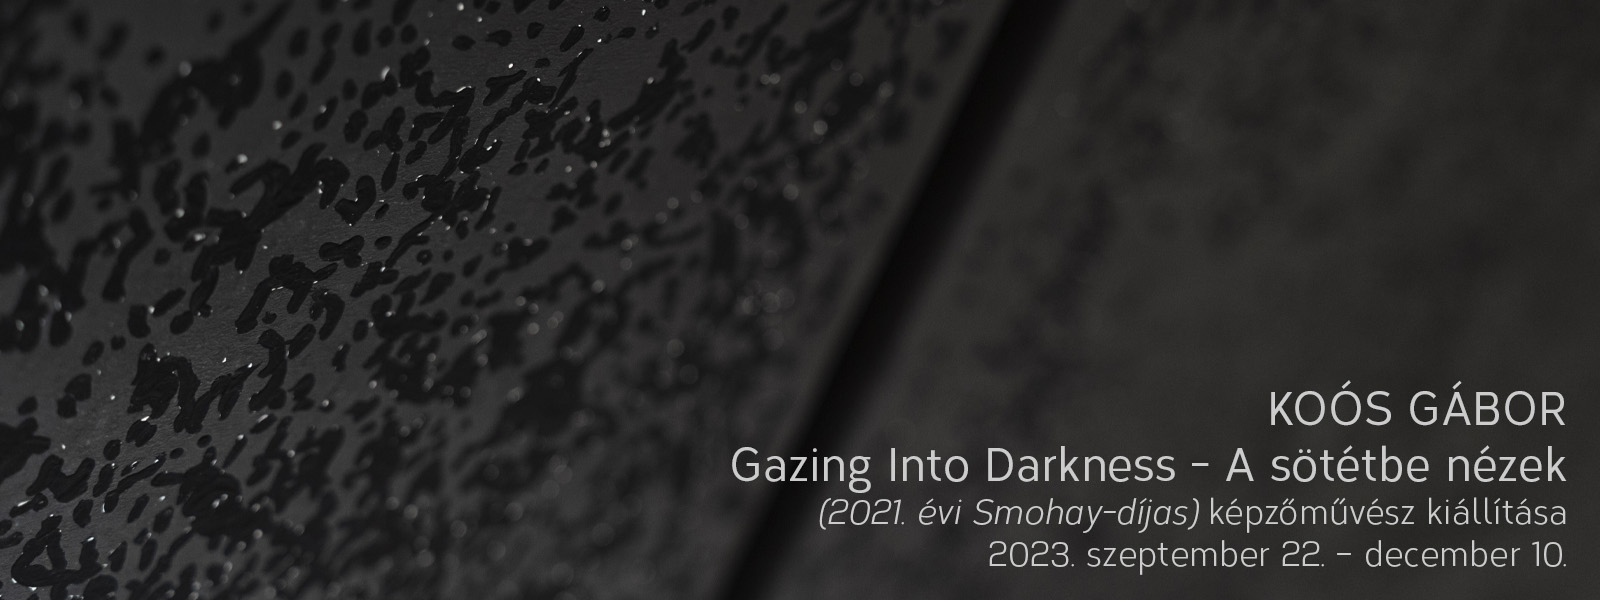 Gazing Into Darkness (A sötétbe nézek)